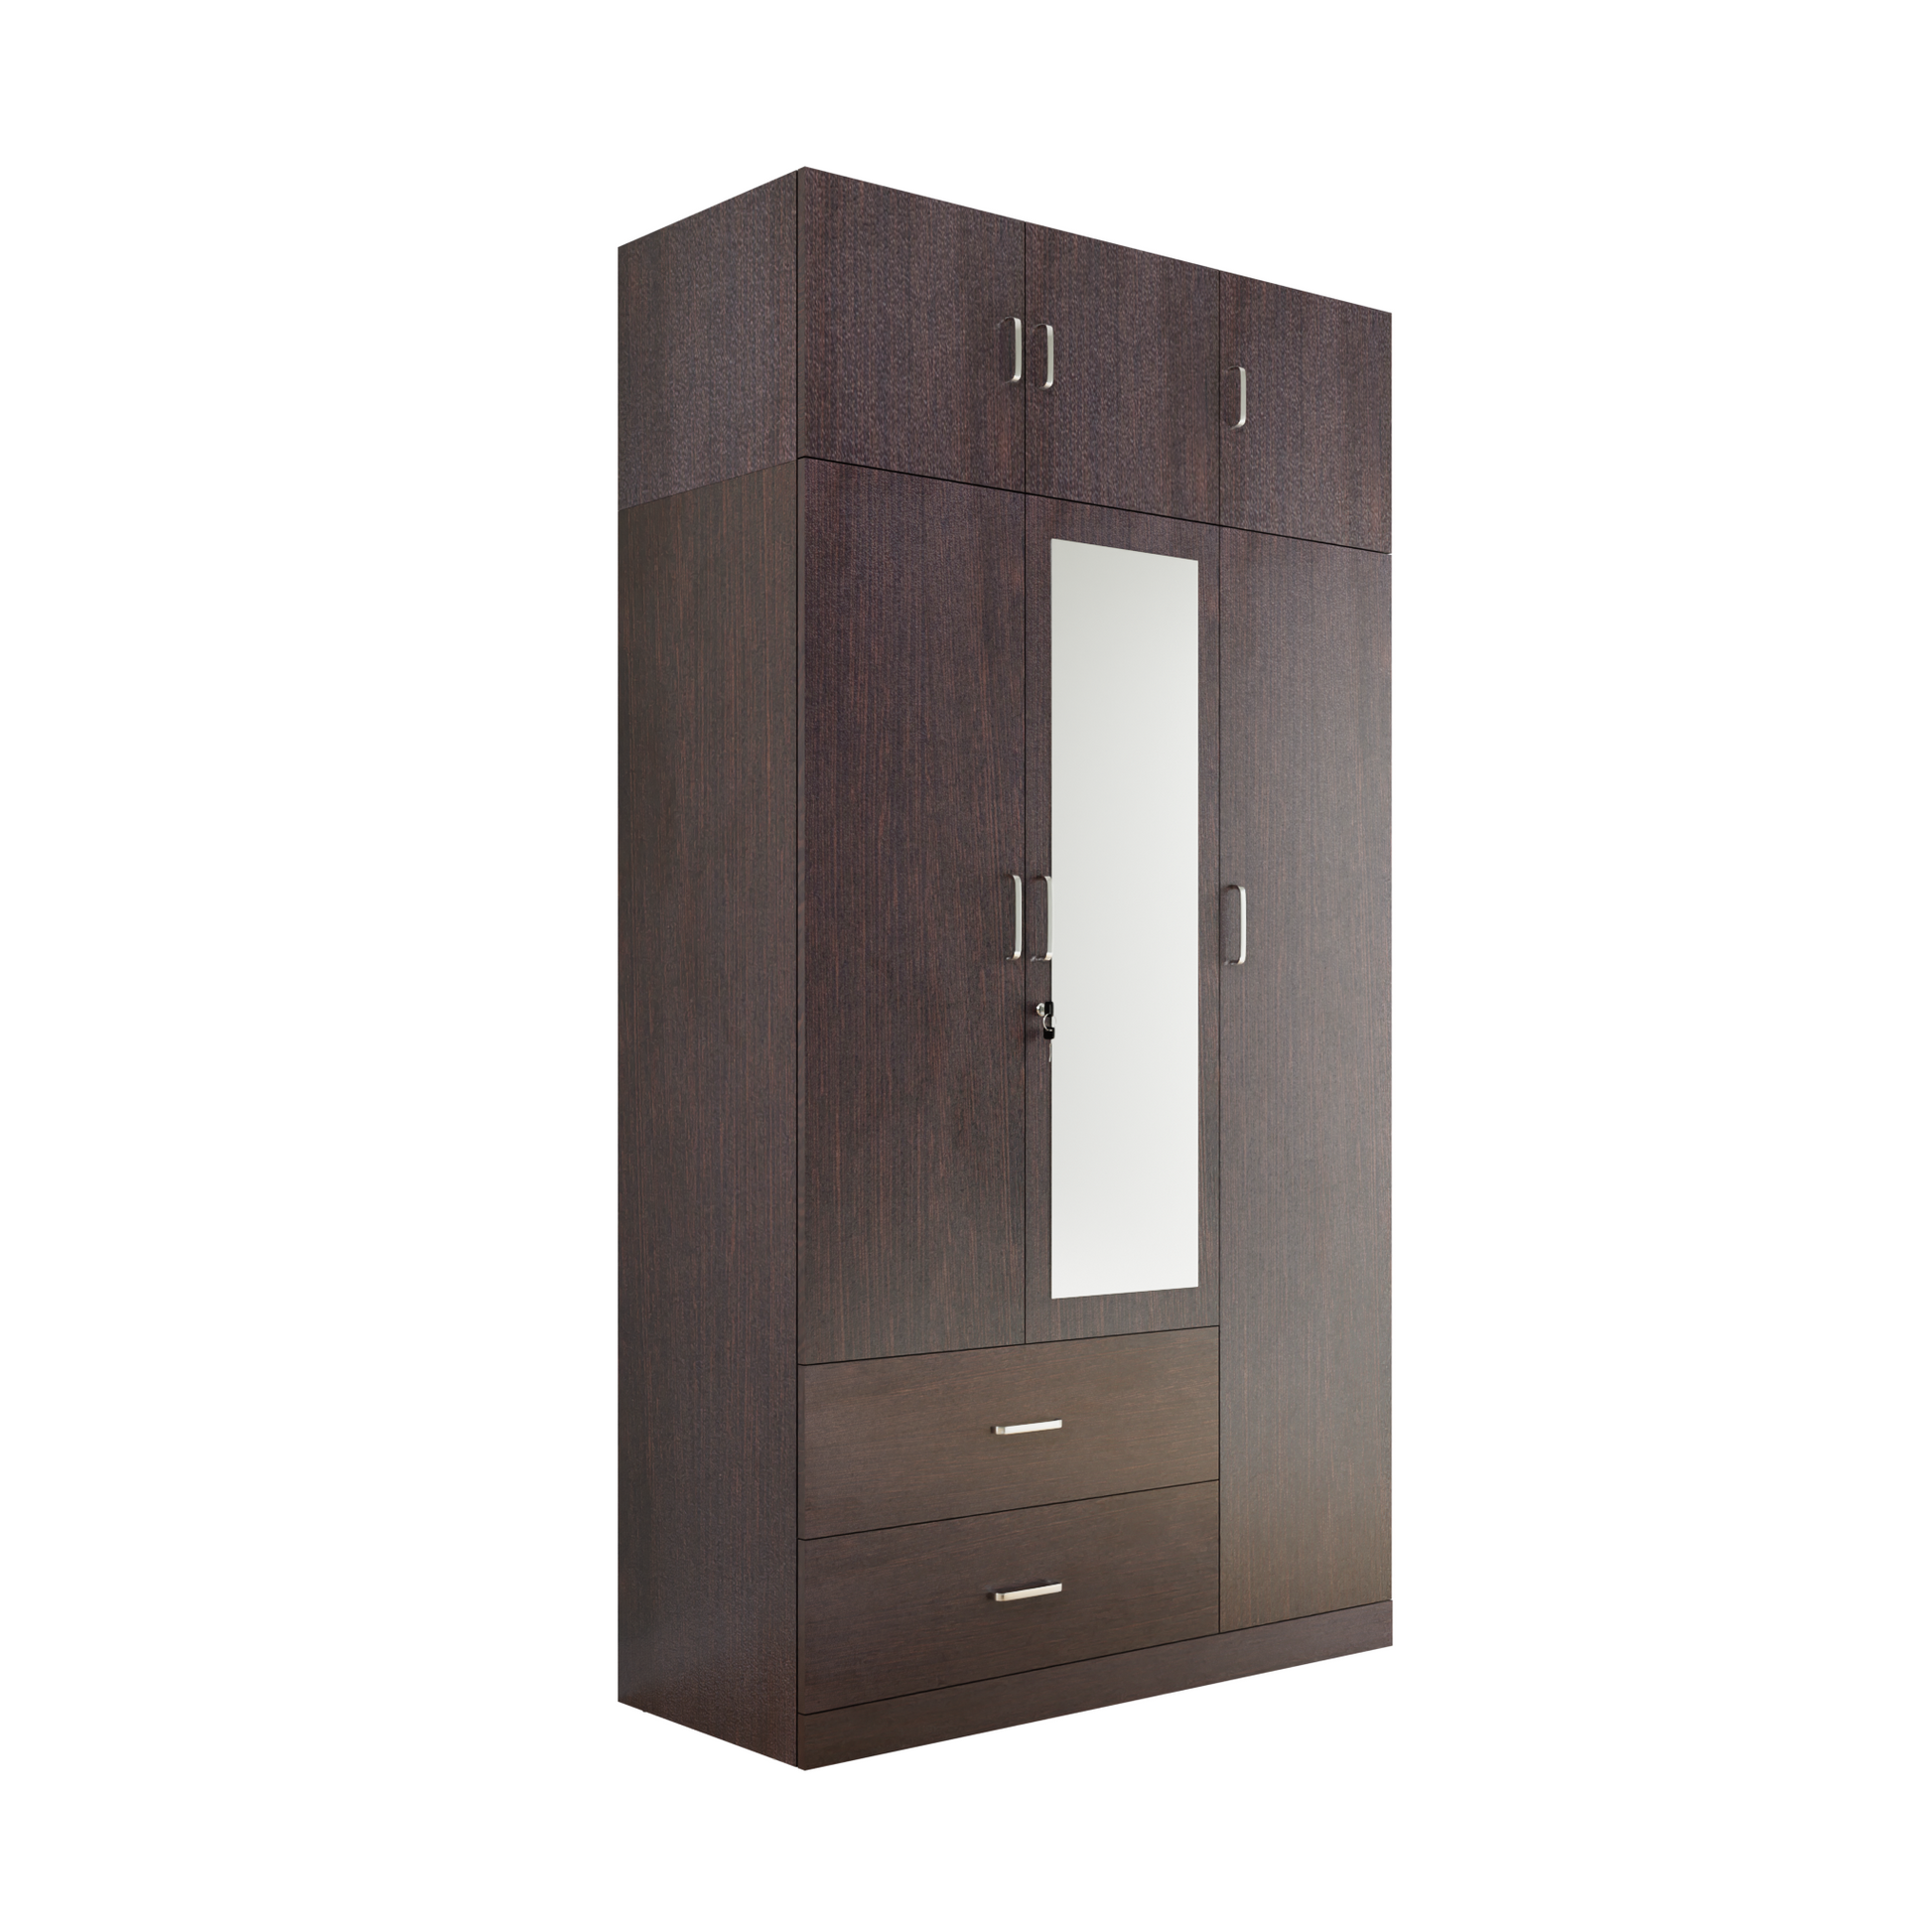 AVIRA |Wardrobe with Mirror, Hinged | 3 Door, 2 Drawer with loft Wardrobes VIKI FURNITURE   